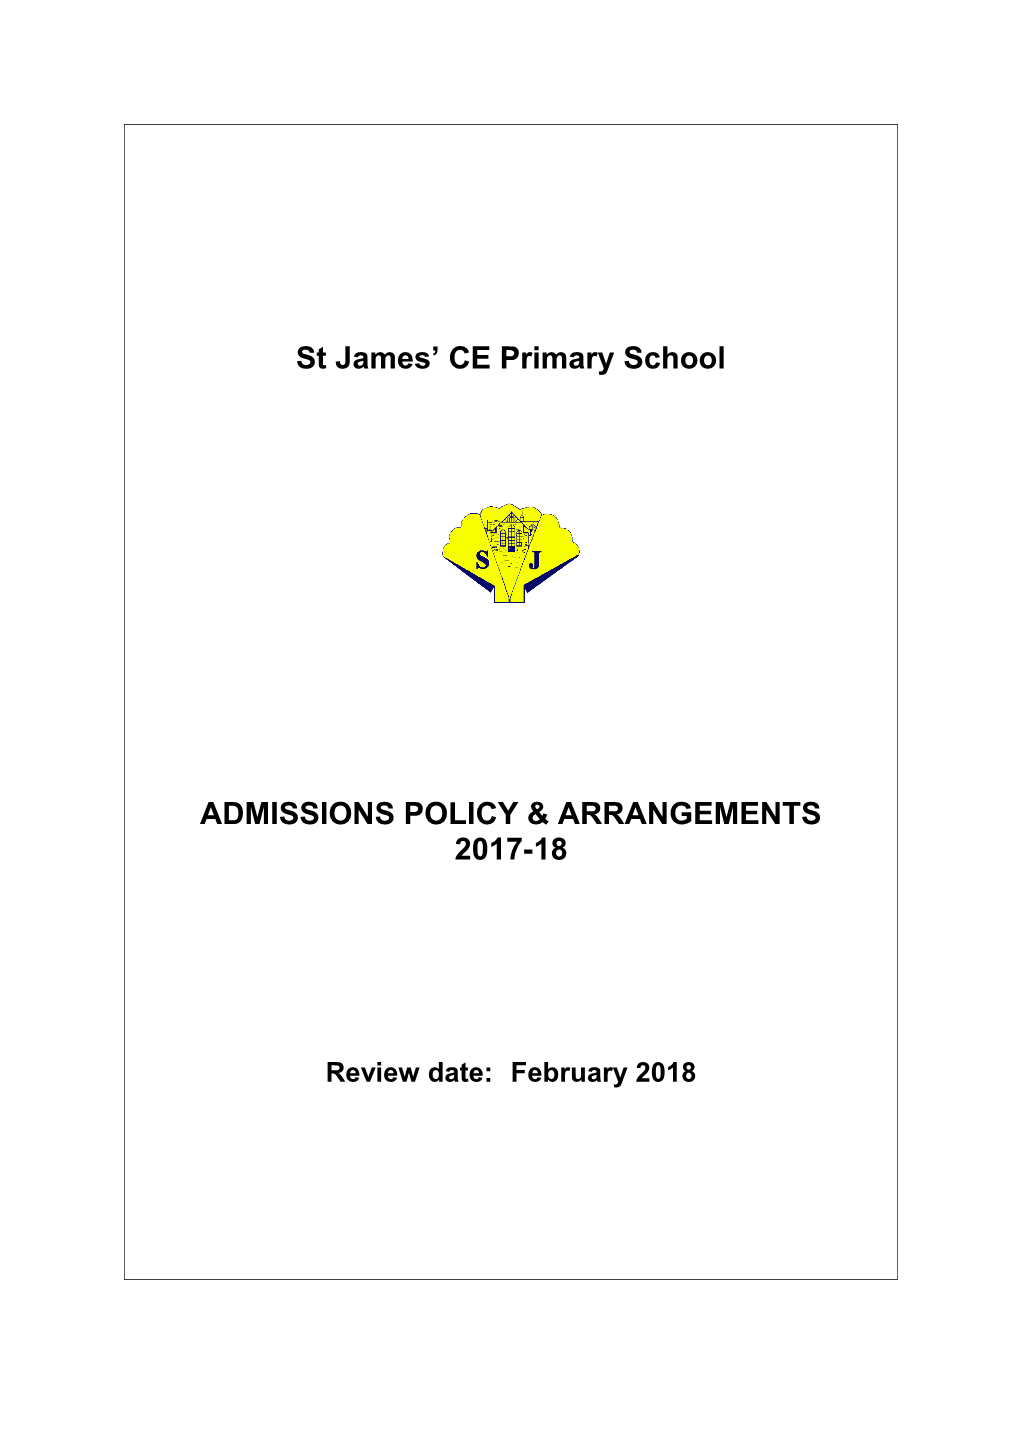 St James CE Primary School Admissions Arrangements 2017/18